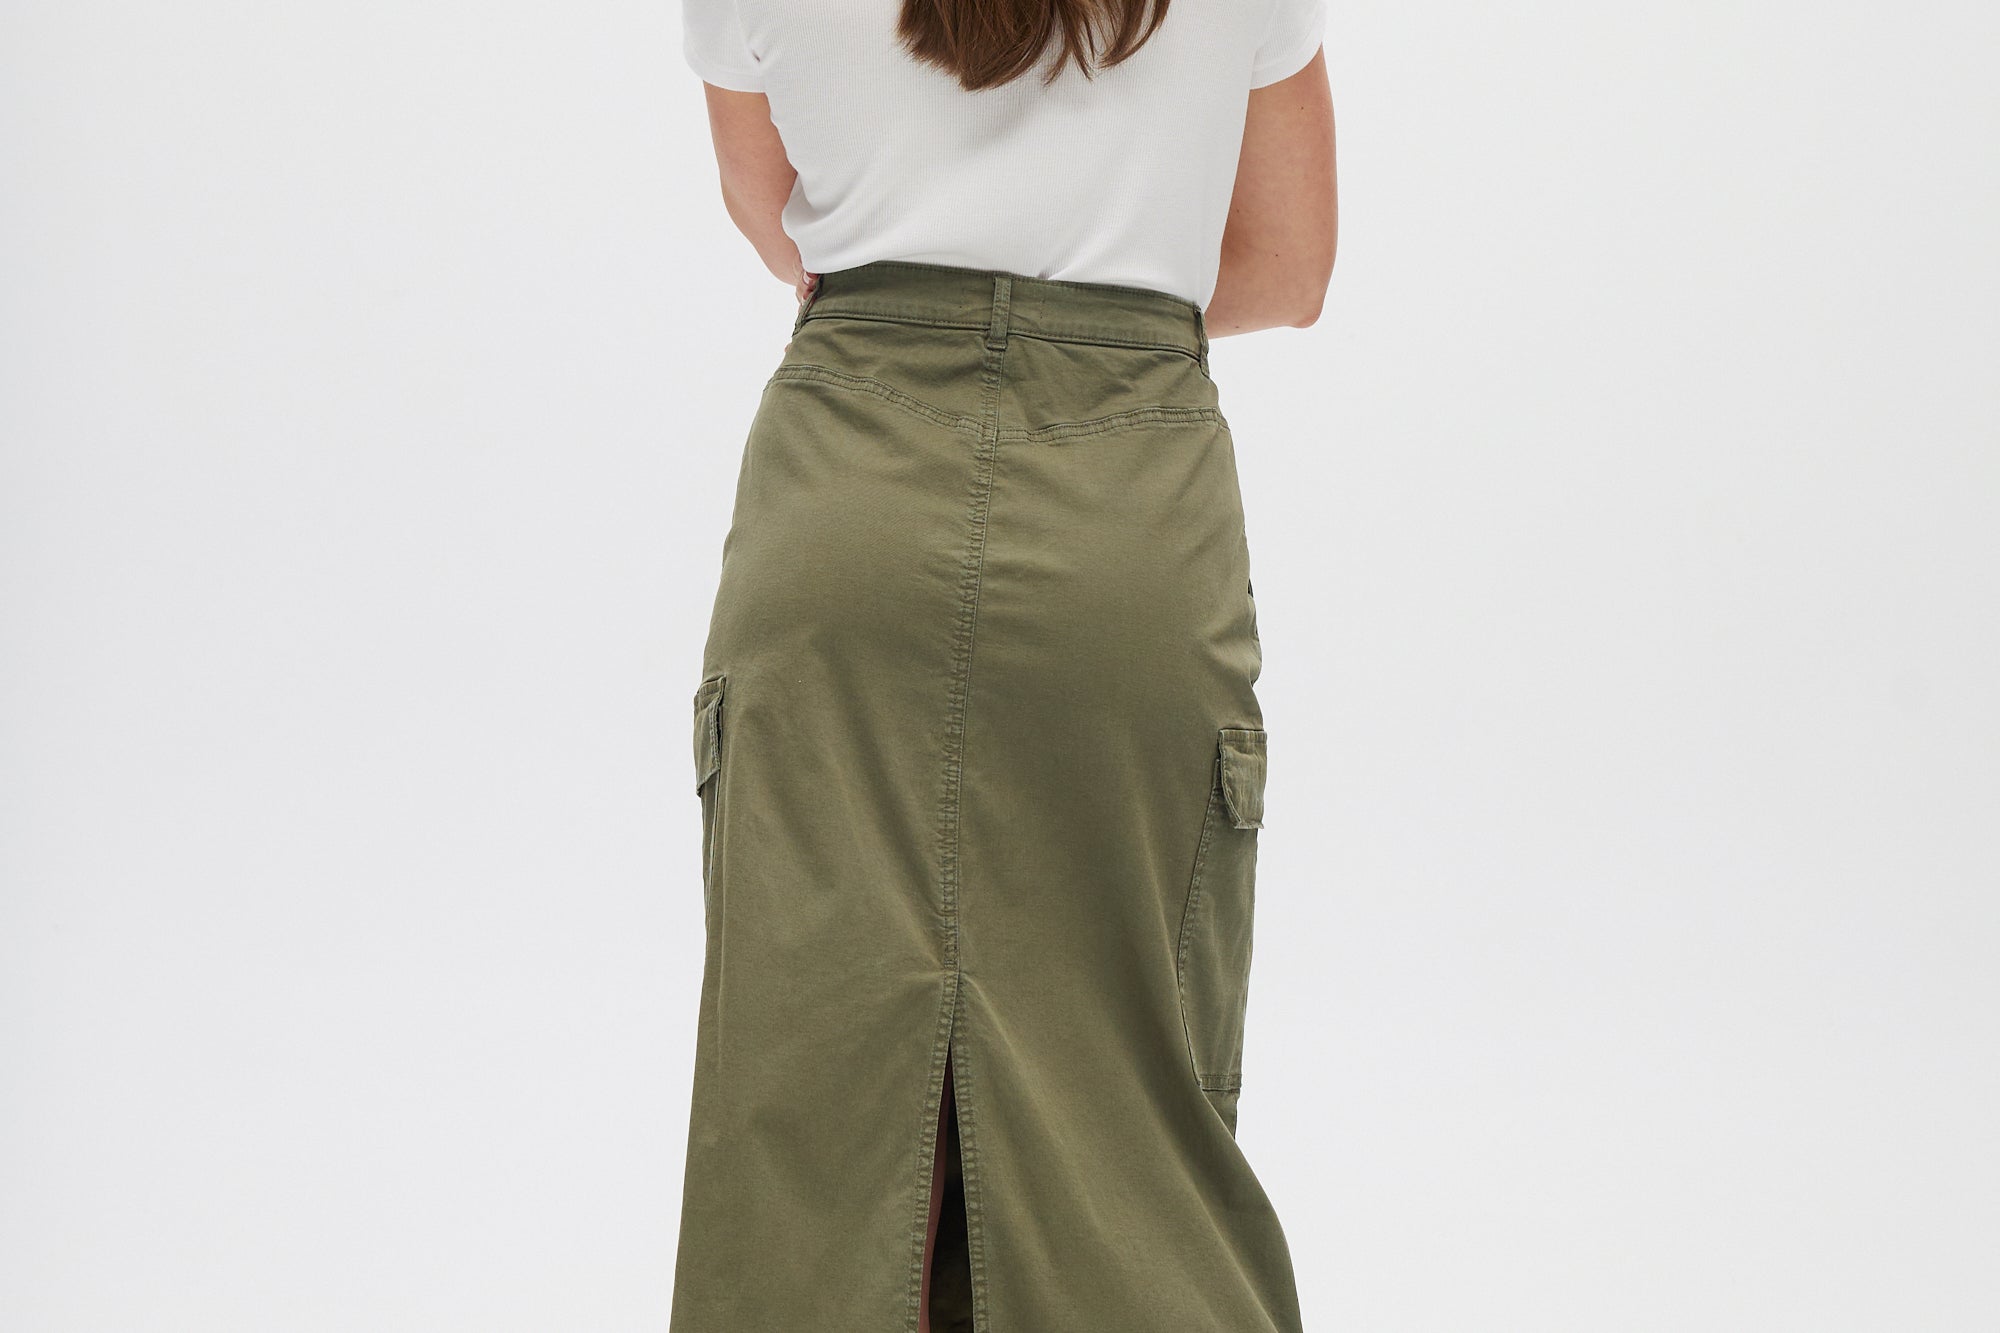 Olive Stretch Twill Skirt back